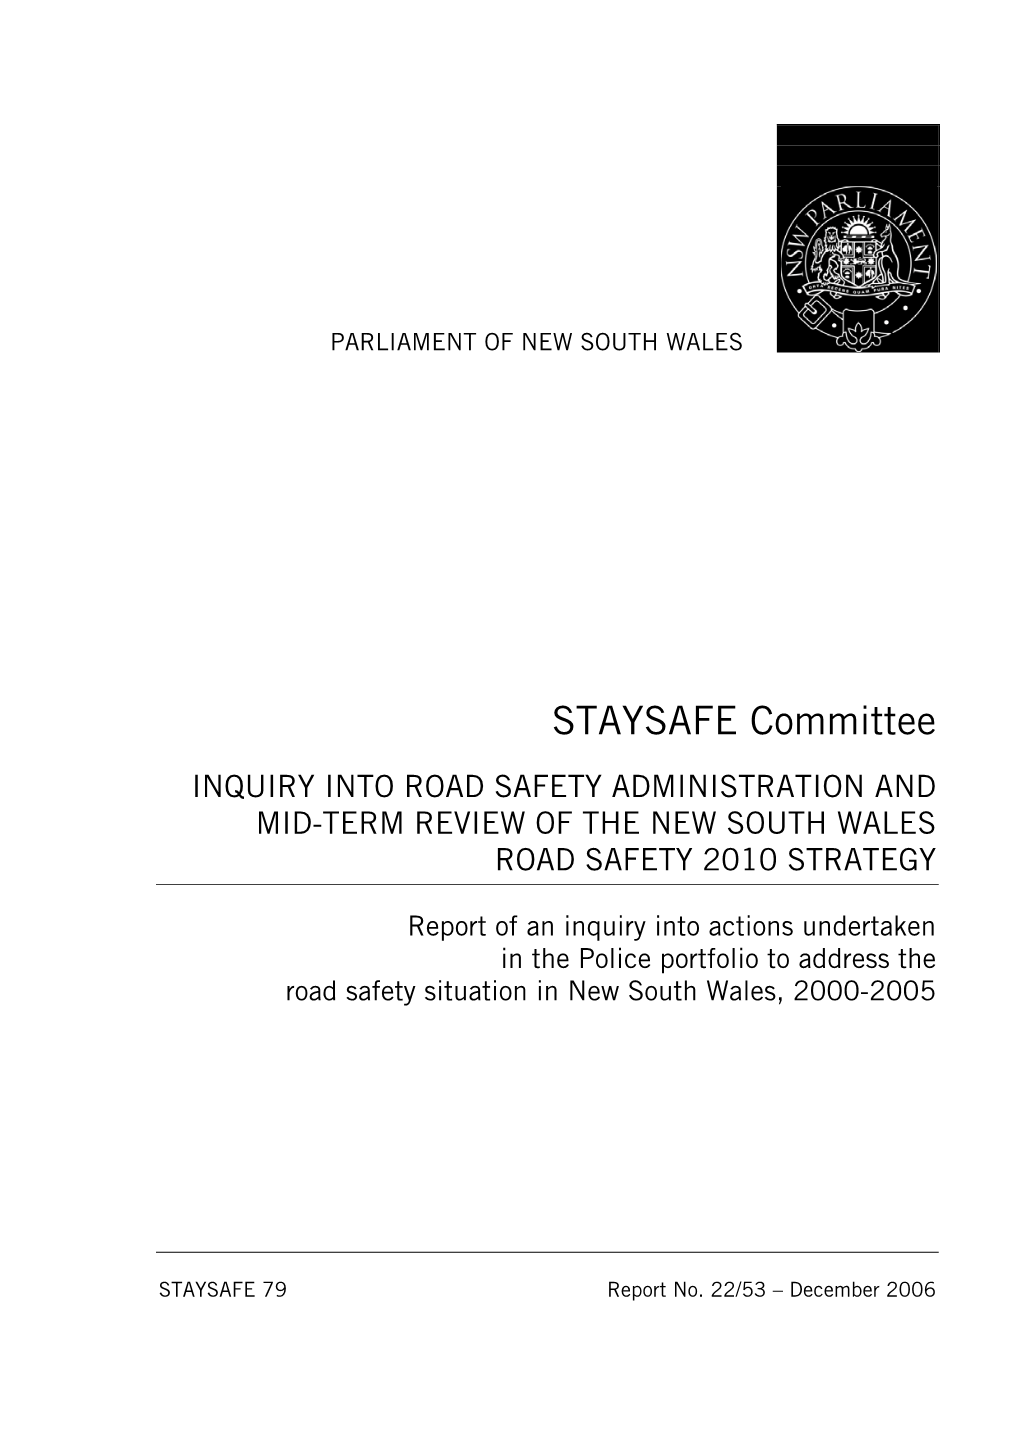 STAYSAFE 79 Report No